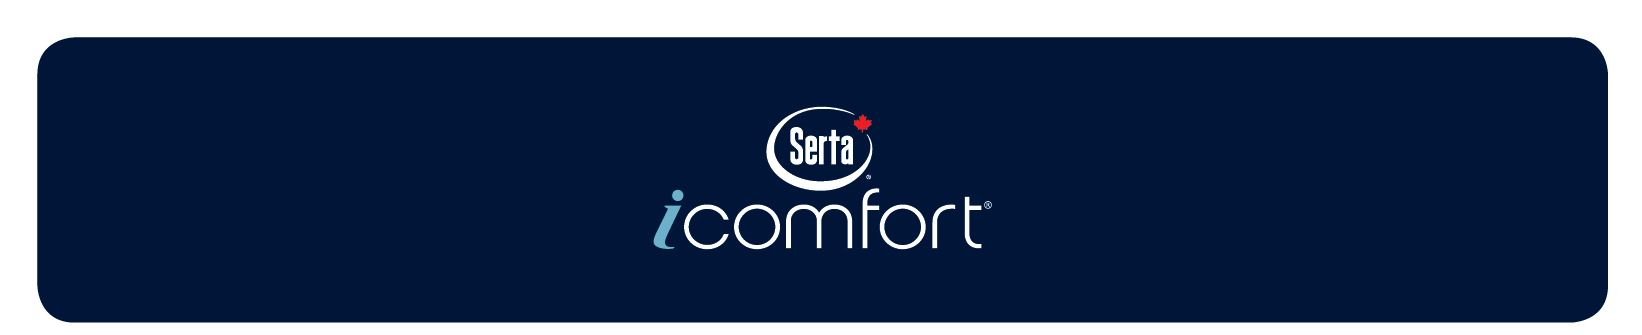 Serta iComfort Memory Foam Mattress Banner